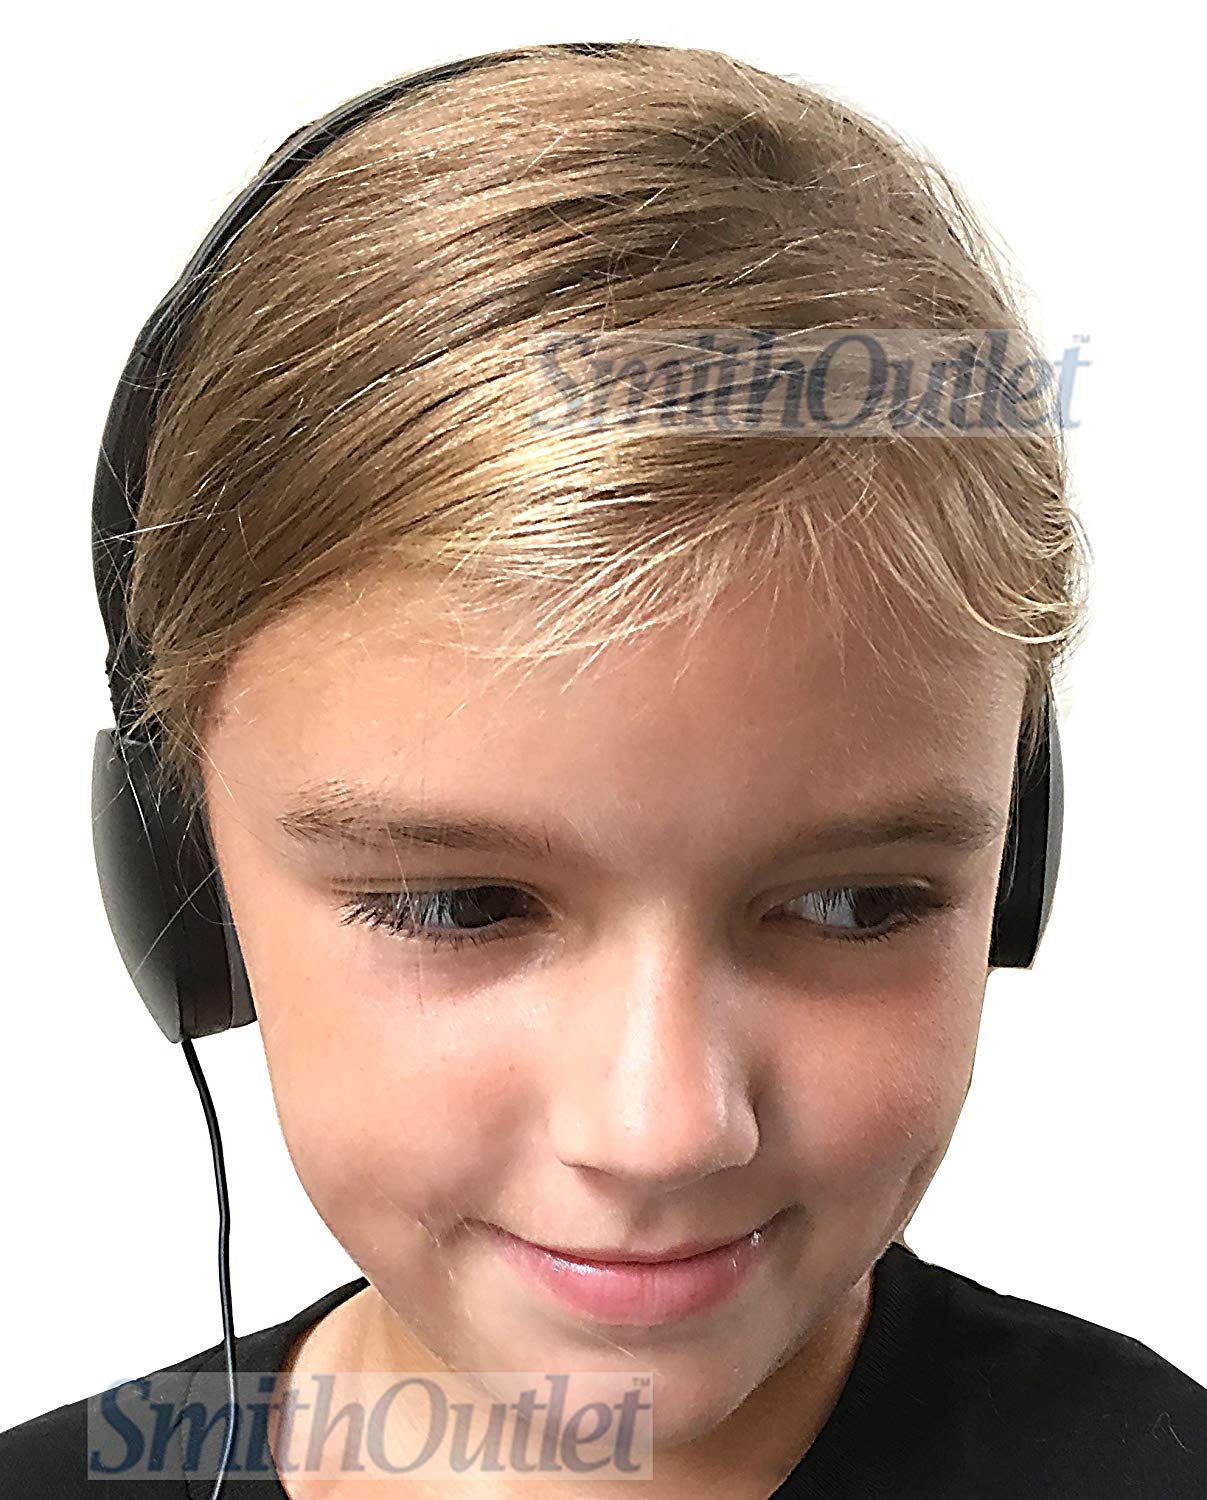 Student Using SmithOutlet Rubber Earpad Headphones in School